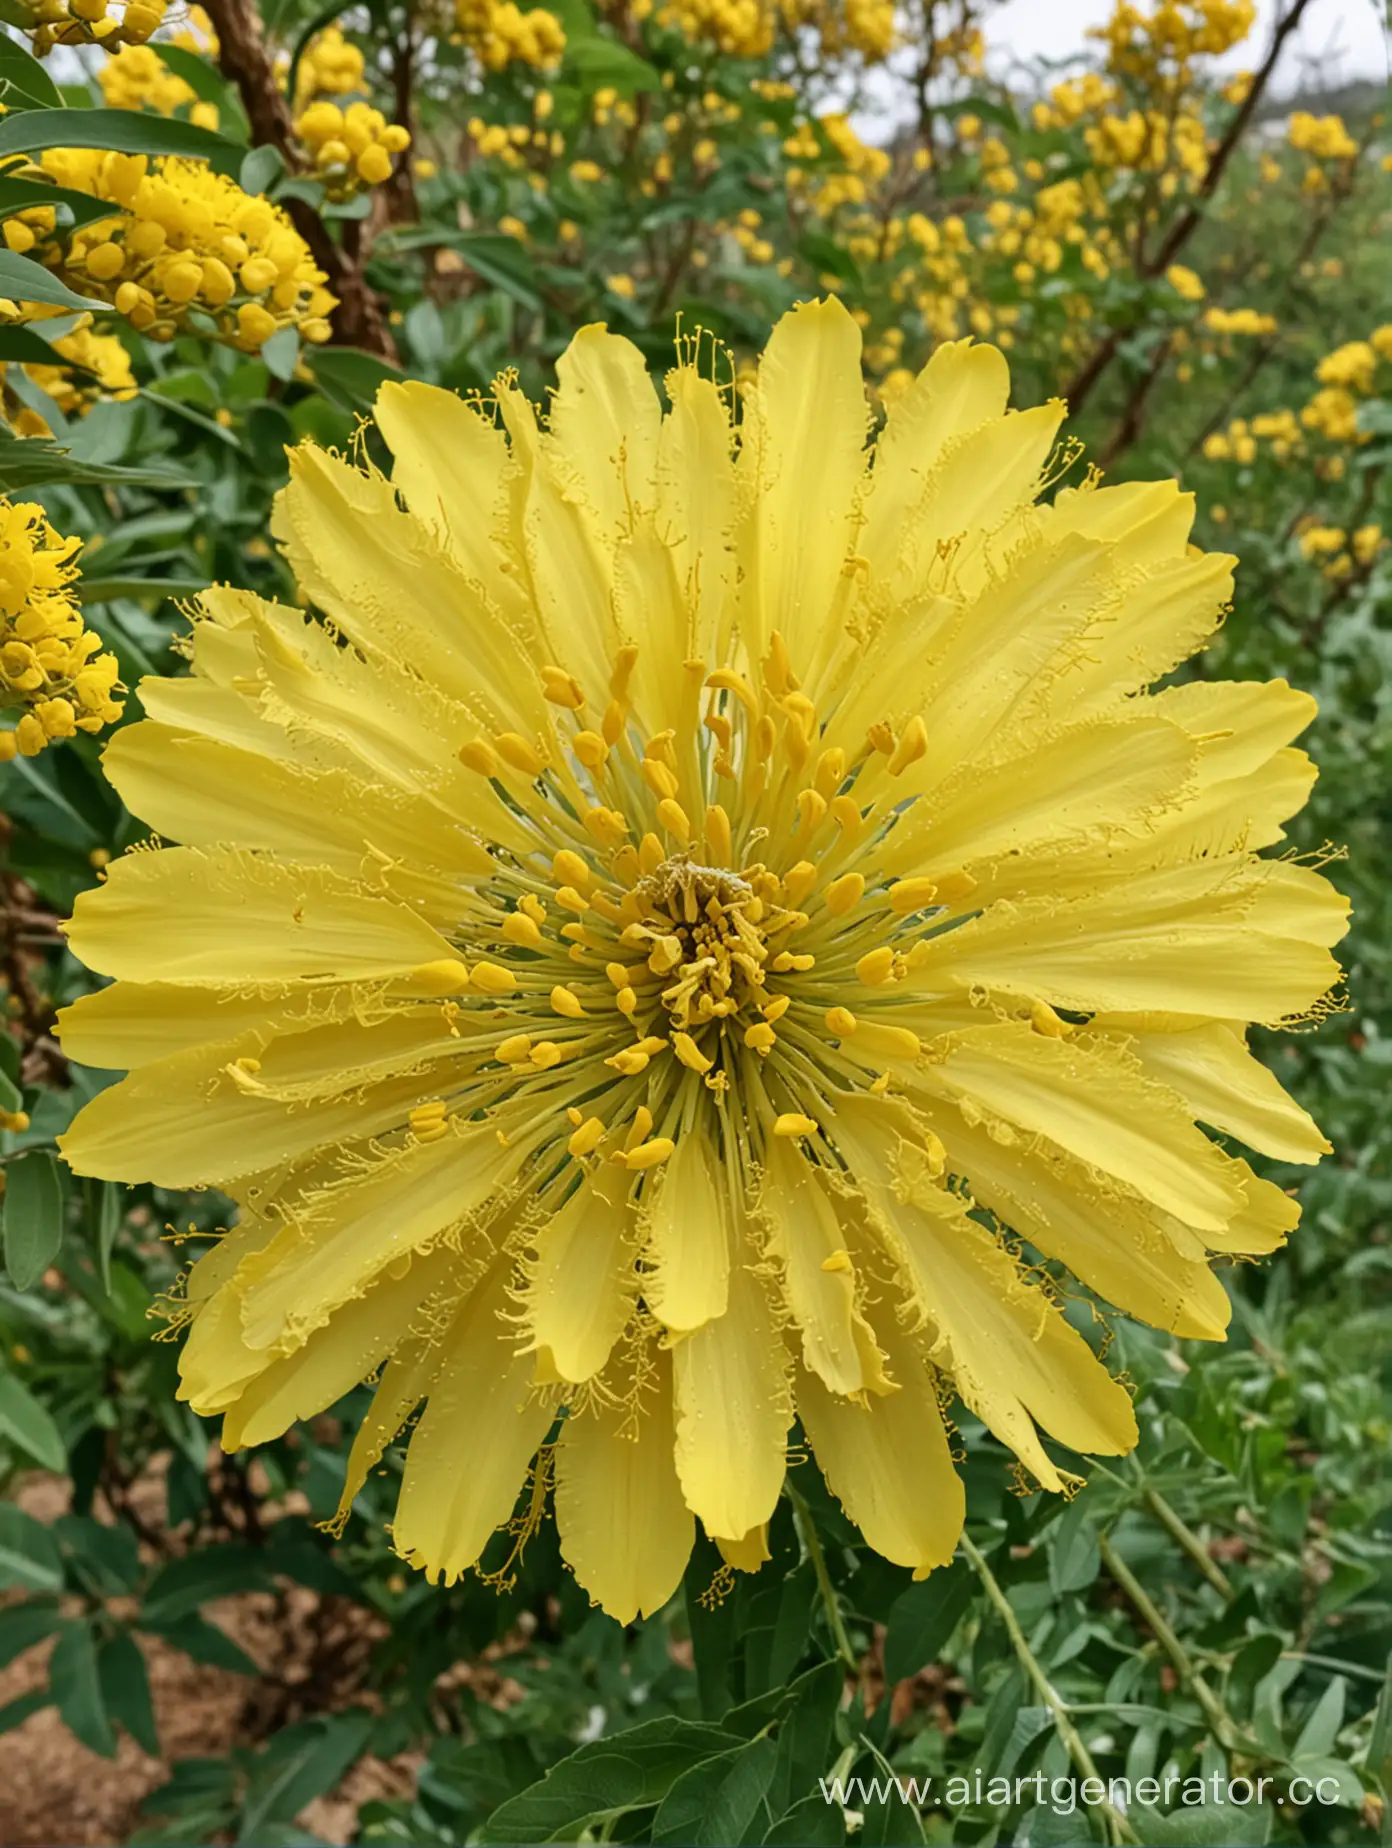 Vibrant-Acacia-Yellow-Flower-Amidst-Lush-Greenery-8K-Macro-Photography